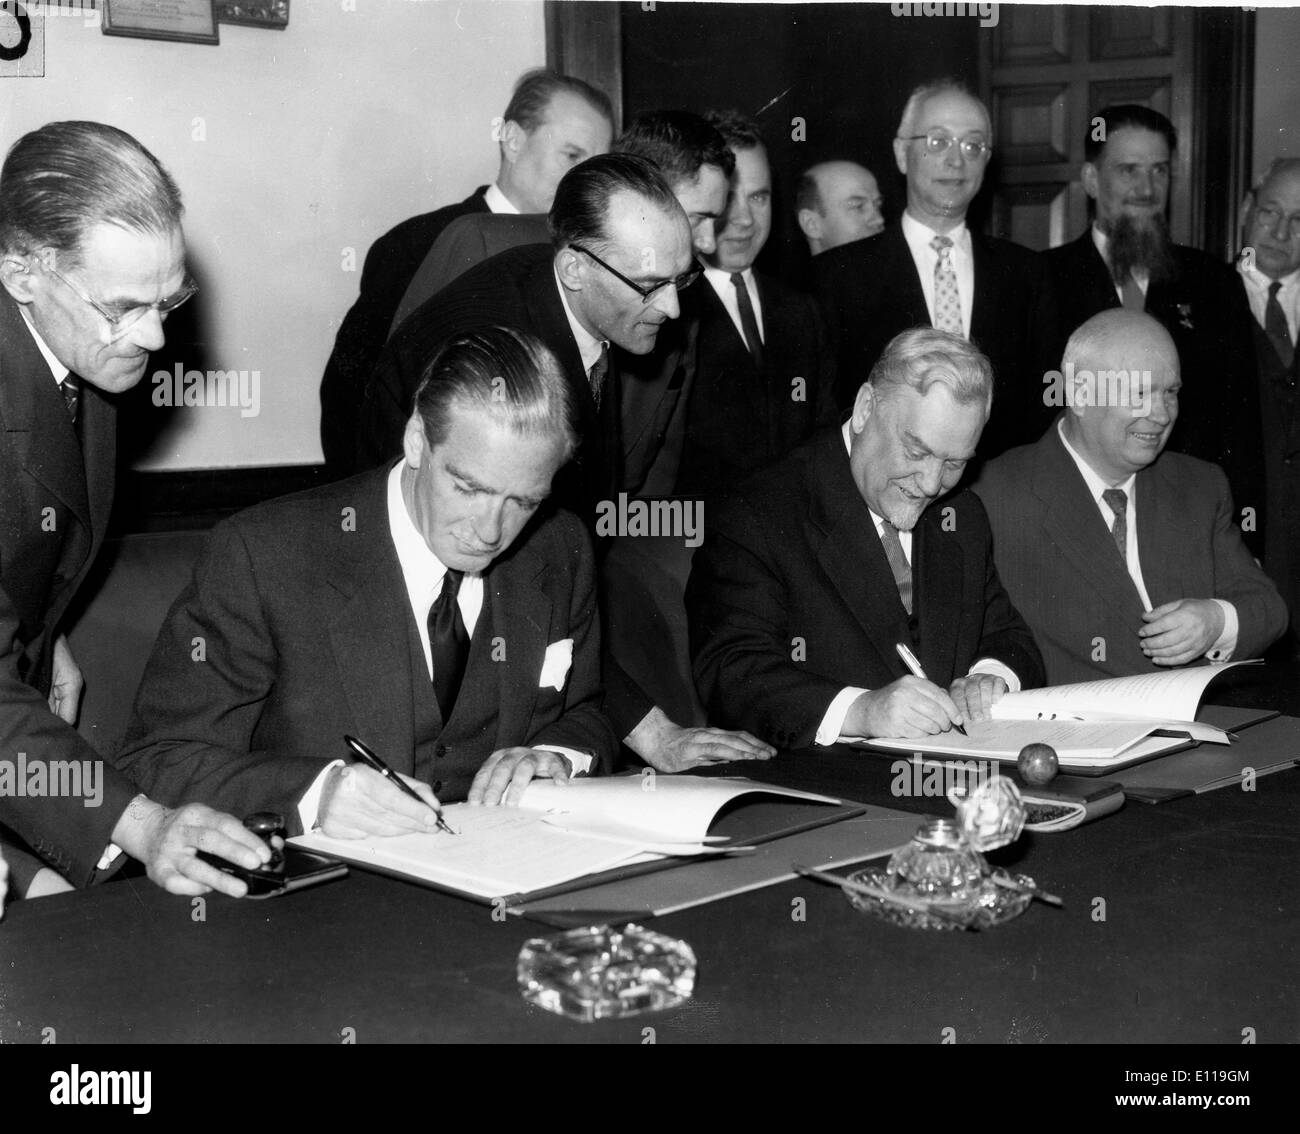 Politiker Anthony Eden und Nikita Khrushchev Signieren von Dokumenten Stockfoto